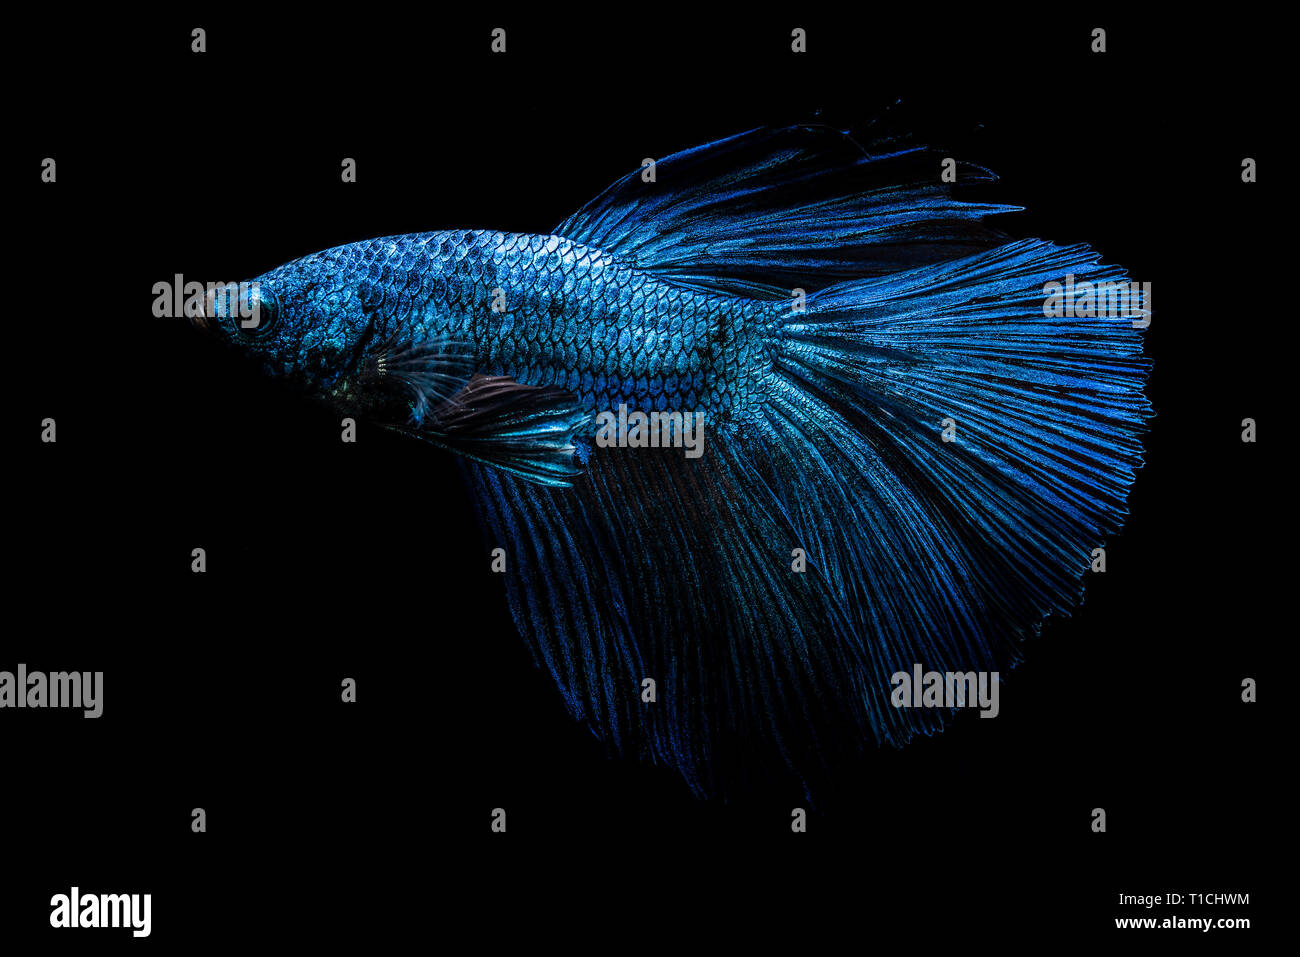 Blue fighting fish on black background Stock Photo